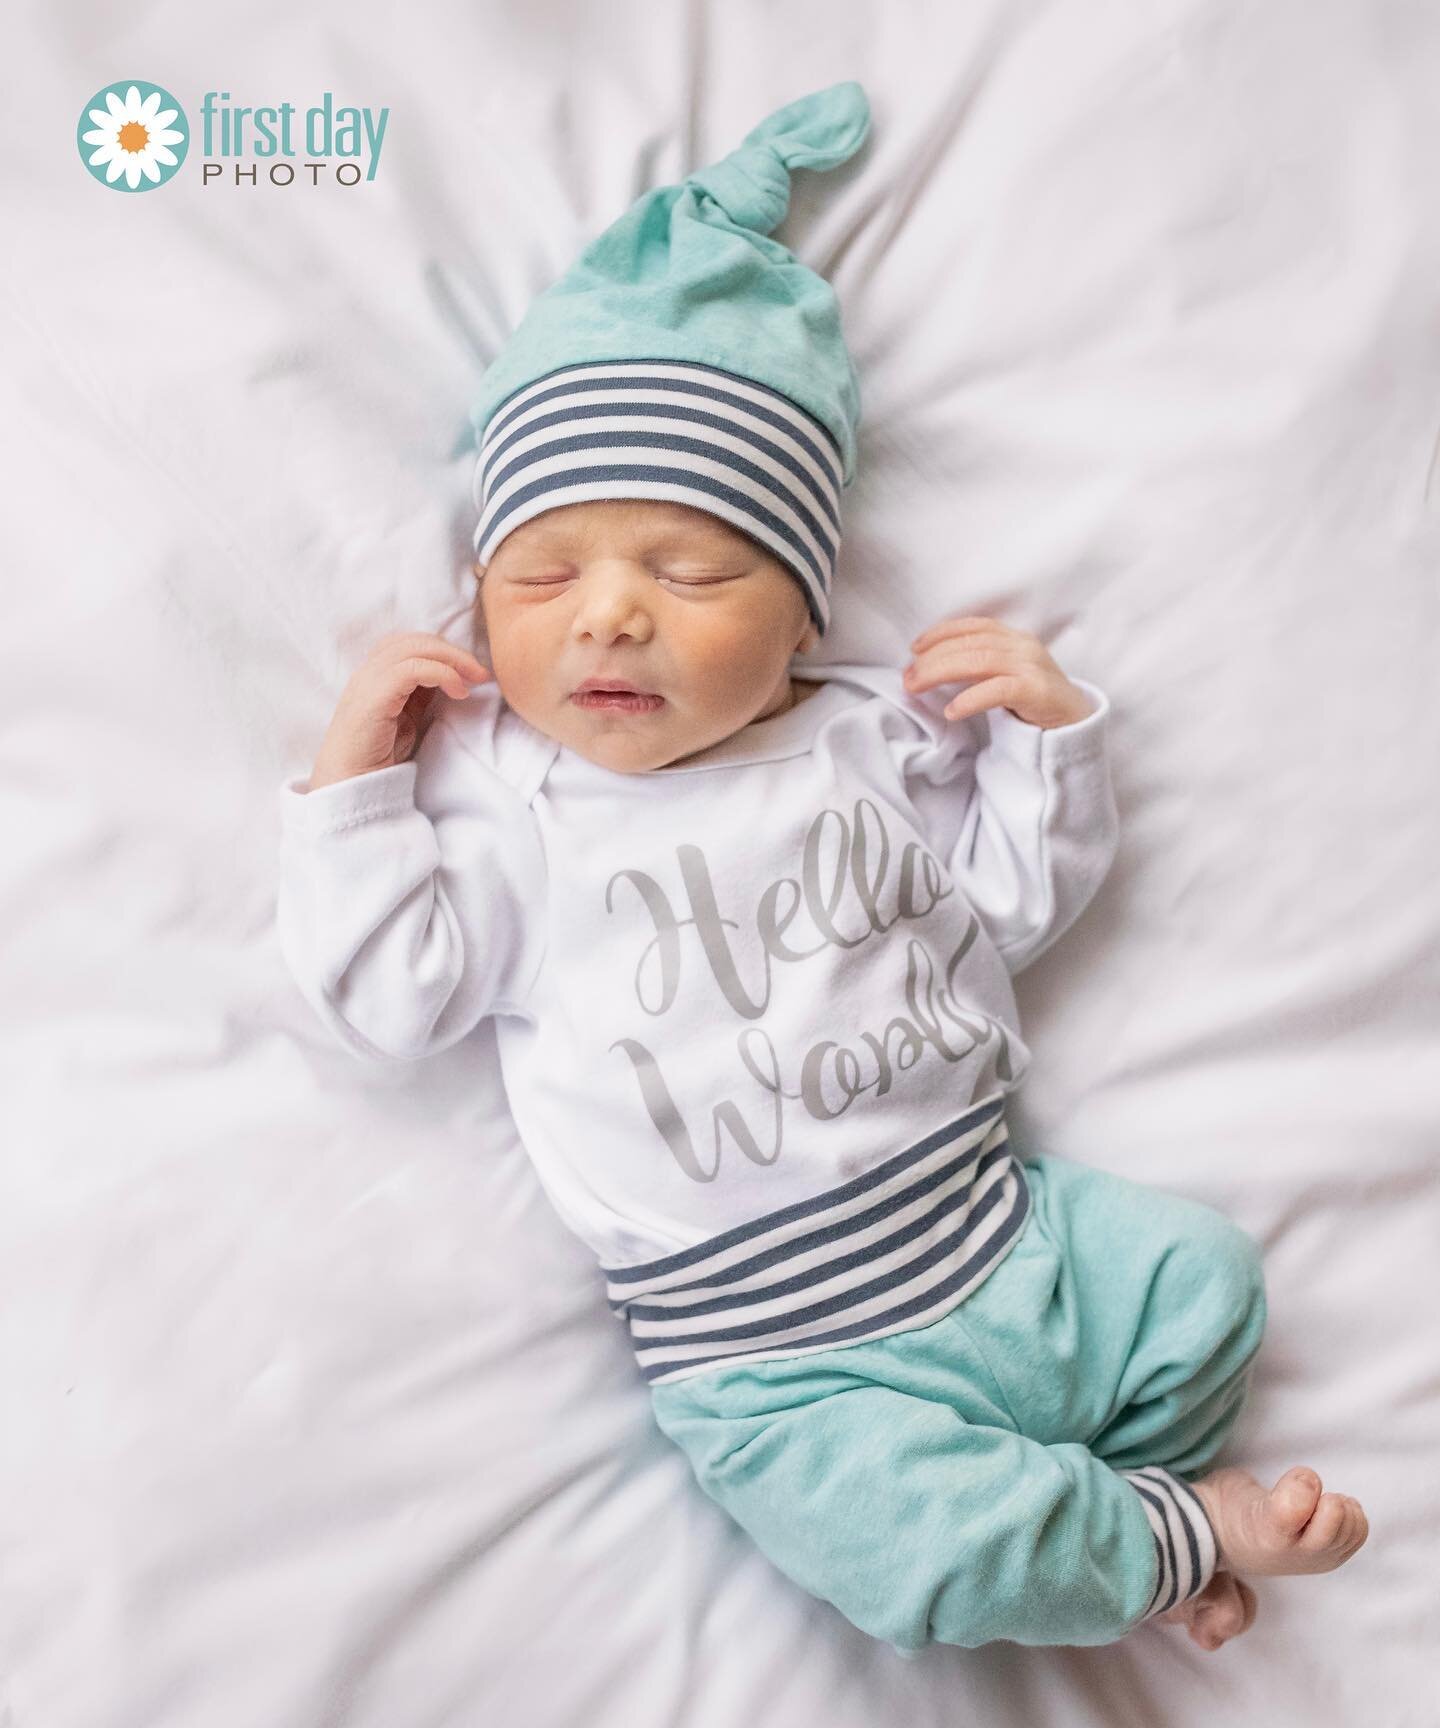 Hello world. 💚
#firstdayphoto
www.firstdayphoto.com
.
.
.
.
.
#fresh48 #first48 #firstdayphotonewborns #newbornphotography #newbornphotographer #babyphoto #babyphotos #babyphotography #babies #cutebaby #babiesofinstagram #bundleofjoy #love #bestjobe